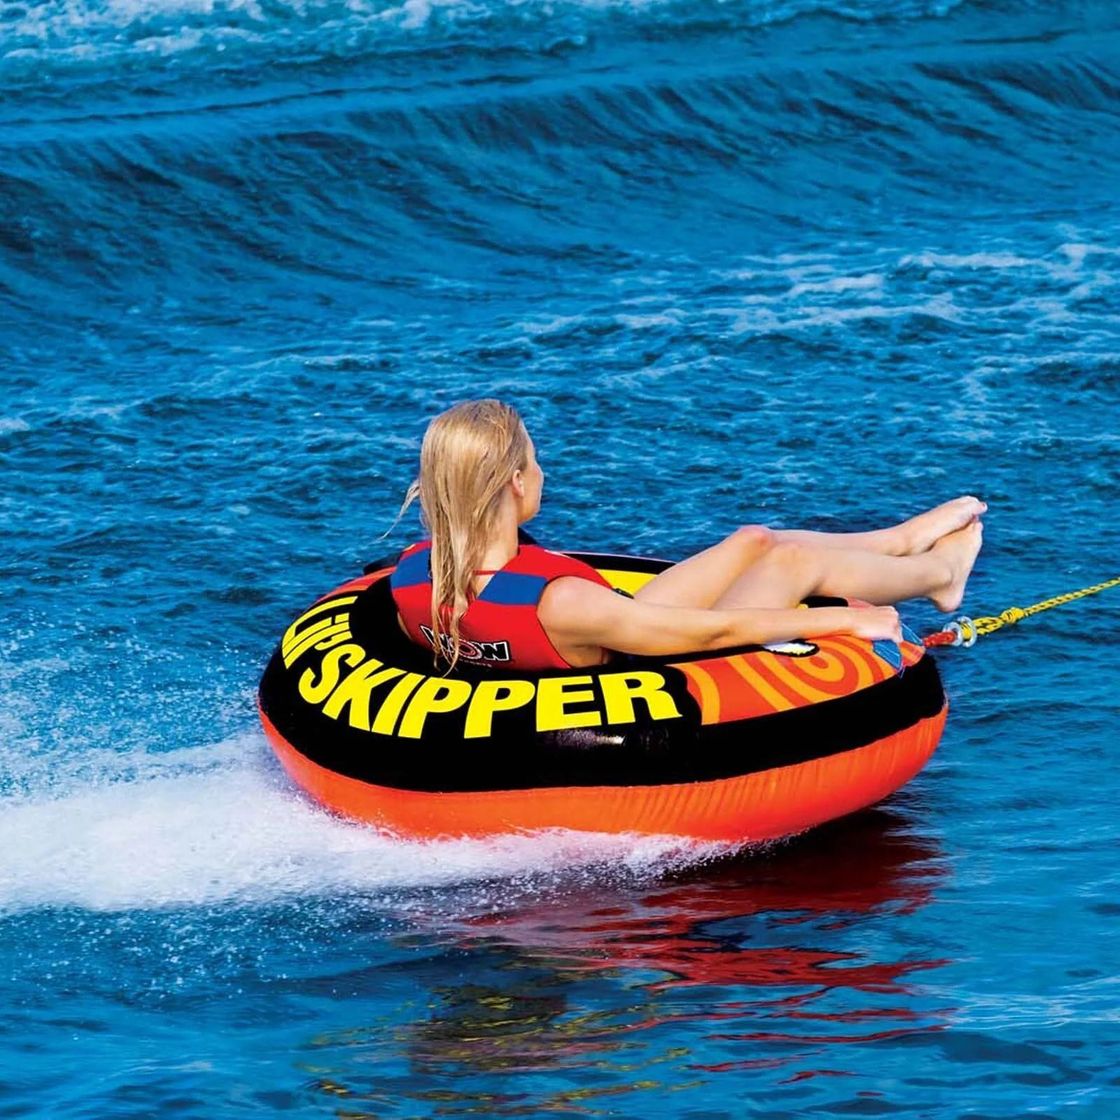 Купить Баллон буксируемый LIL\'Skipper 1P World of watersports 22WTO4153 7ft.ru в интернет магазине Семь Футов